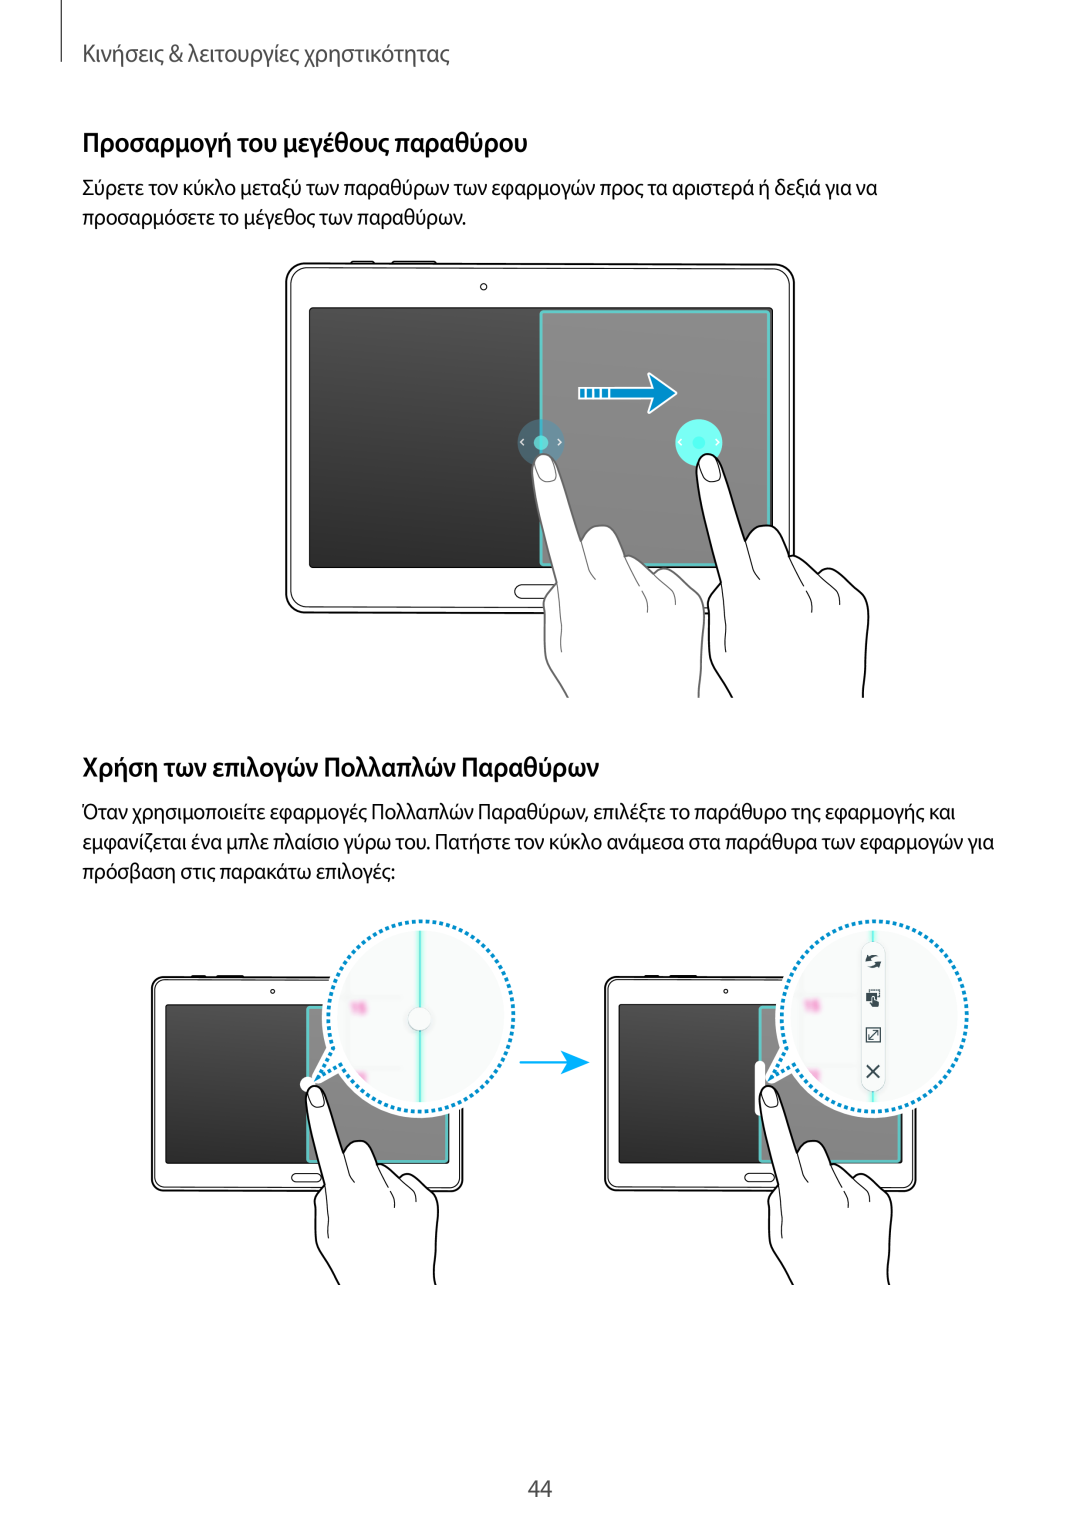 Samsung SM-T805NTSAEUR, SM-T805NZWAEUR manual Προσαρμογή του μεγέθους παραθύρου, Χρήση των επιλογών Πολλαπλών Παραθύρων 